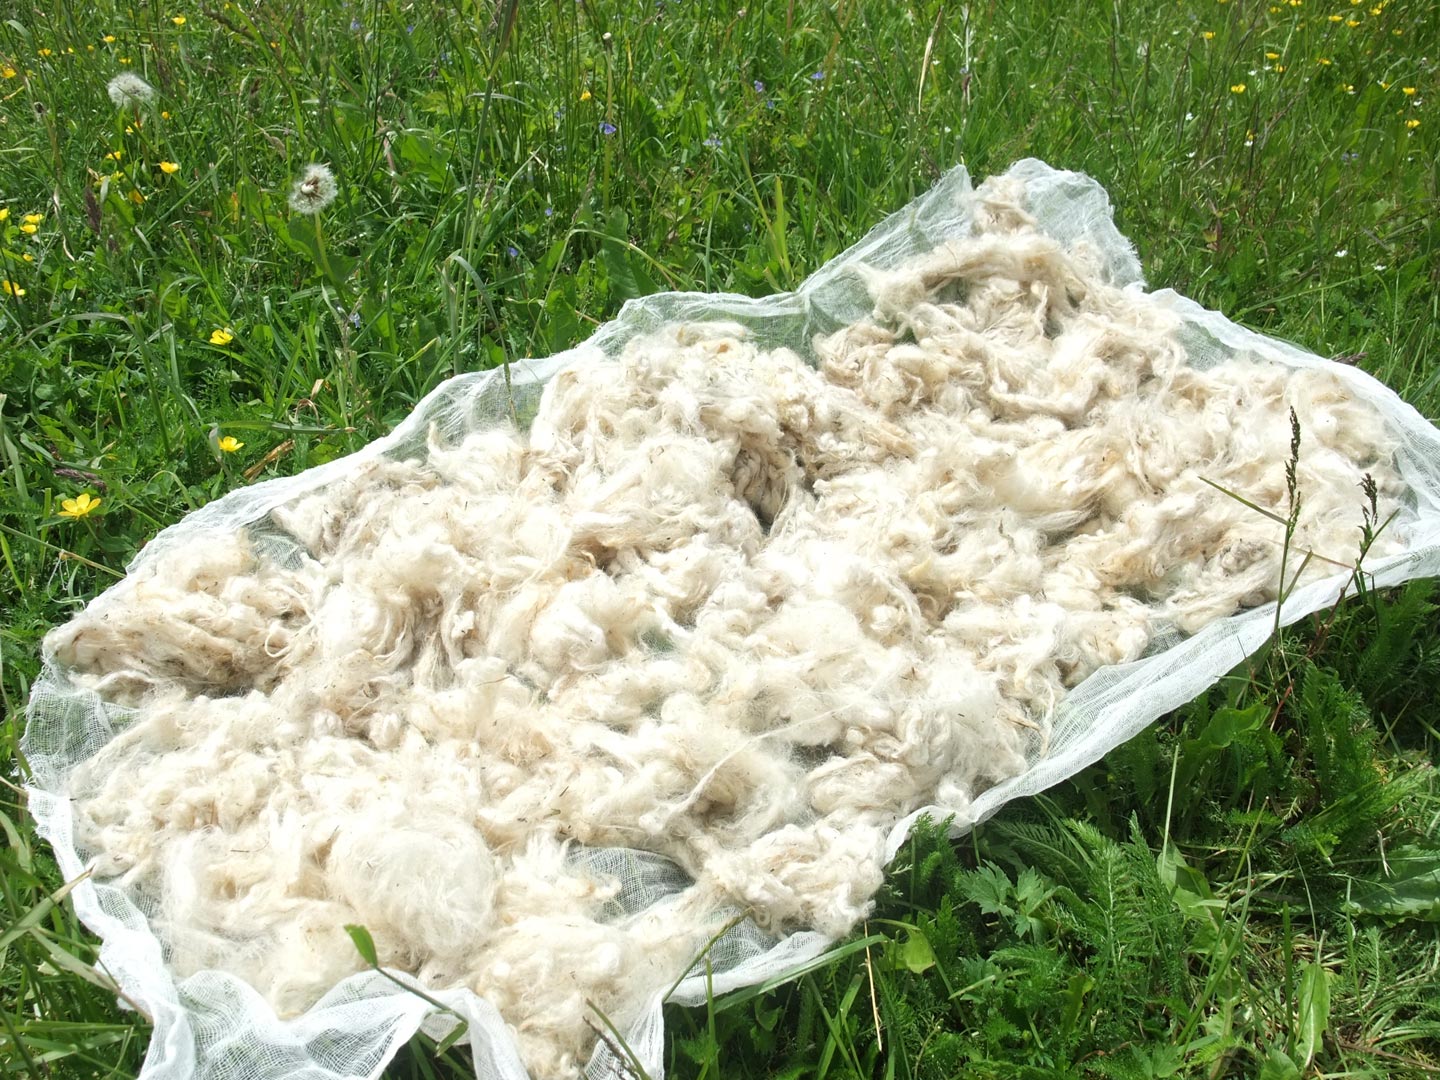 Wool drying